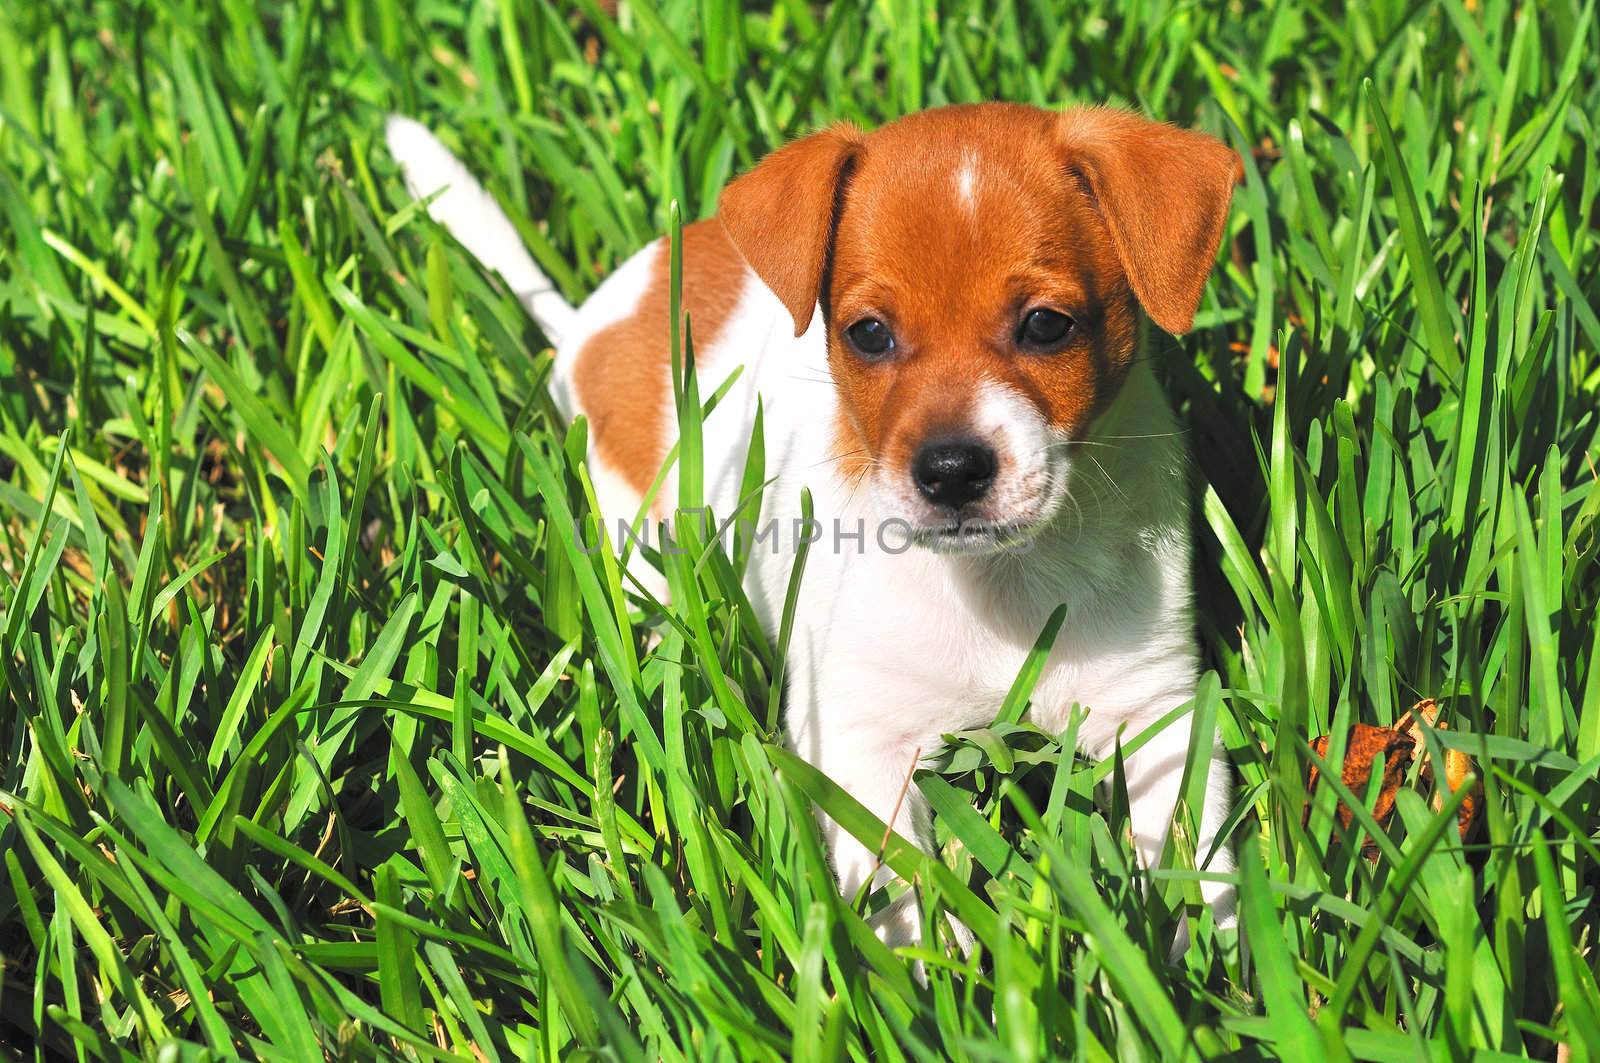 Puppy in the grass by ben44